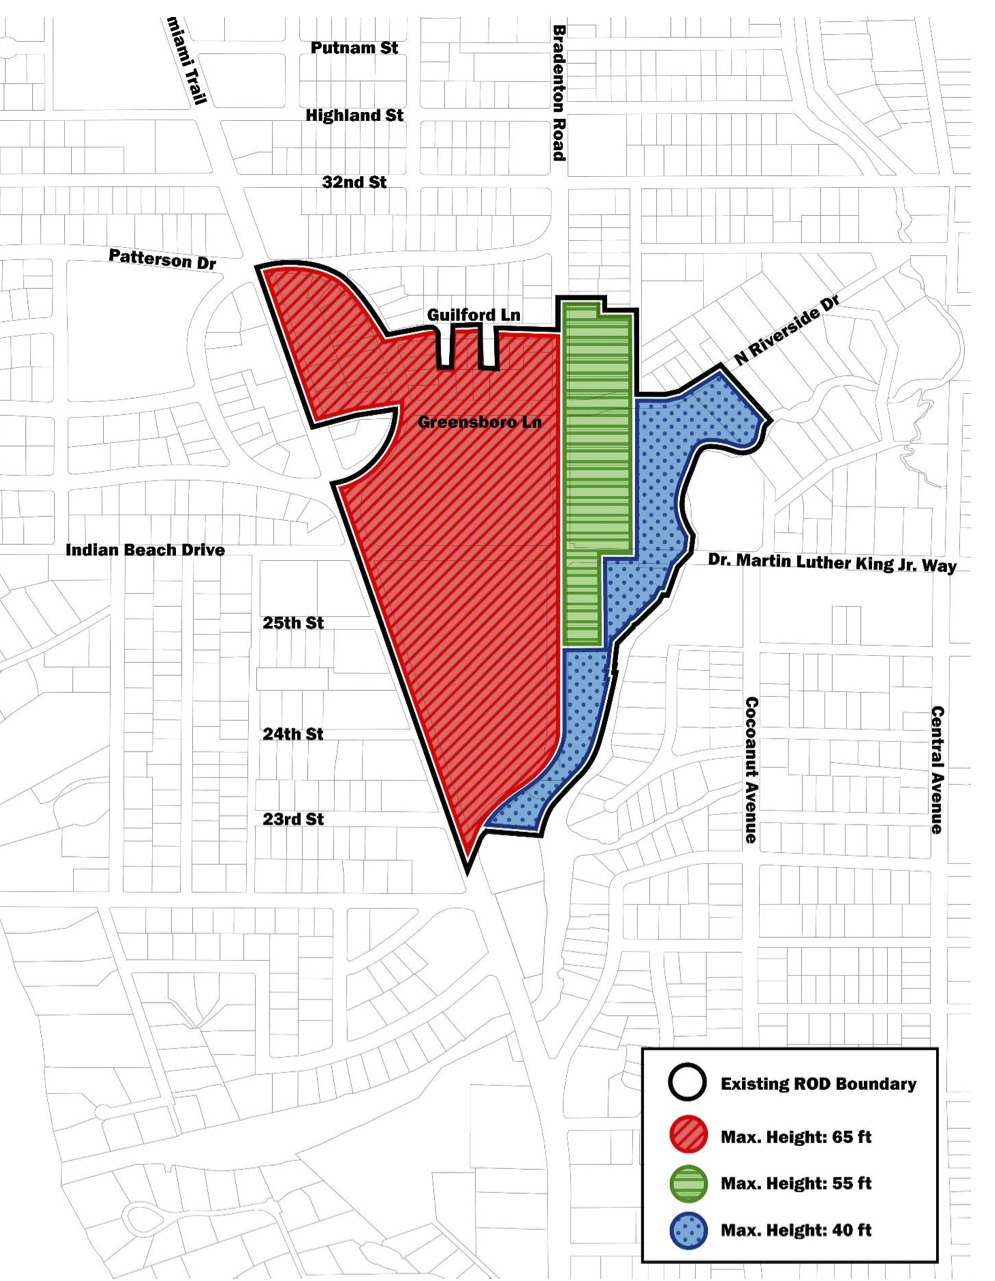 Revised Ringling Overlay District boundaries. Image via city of Sarasota.